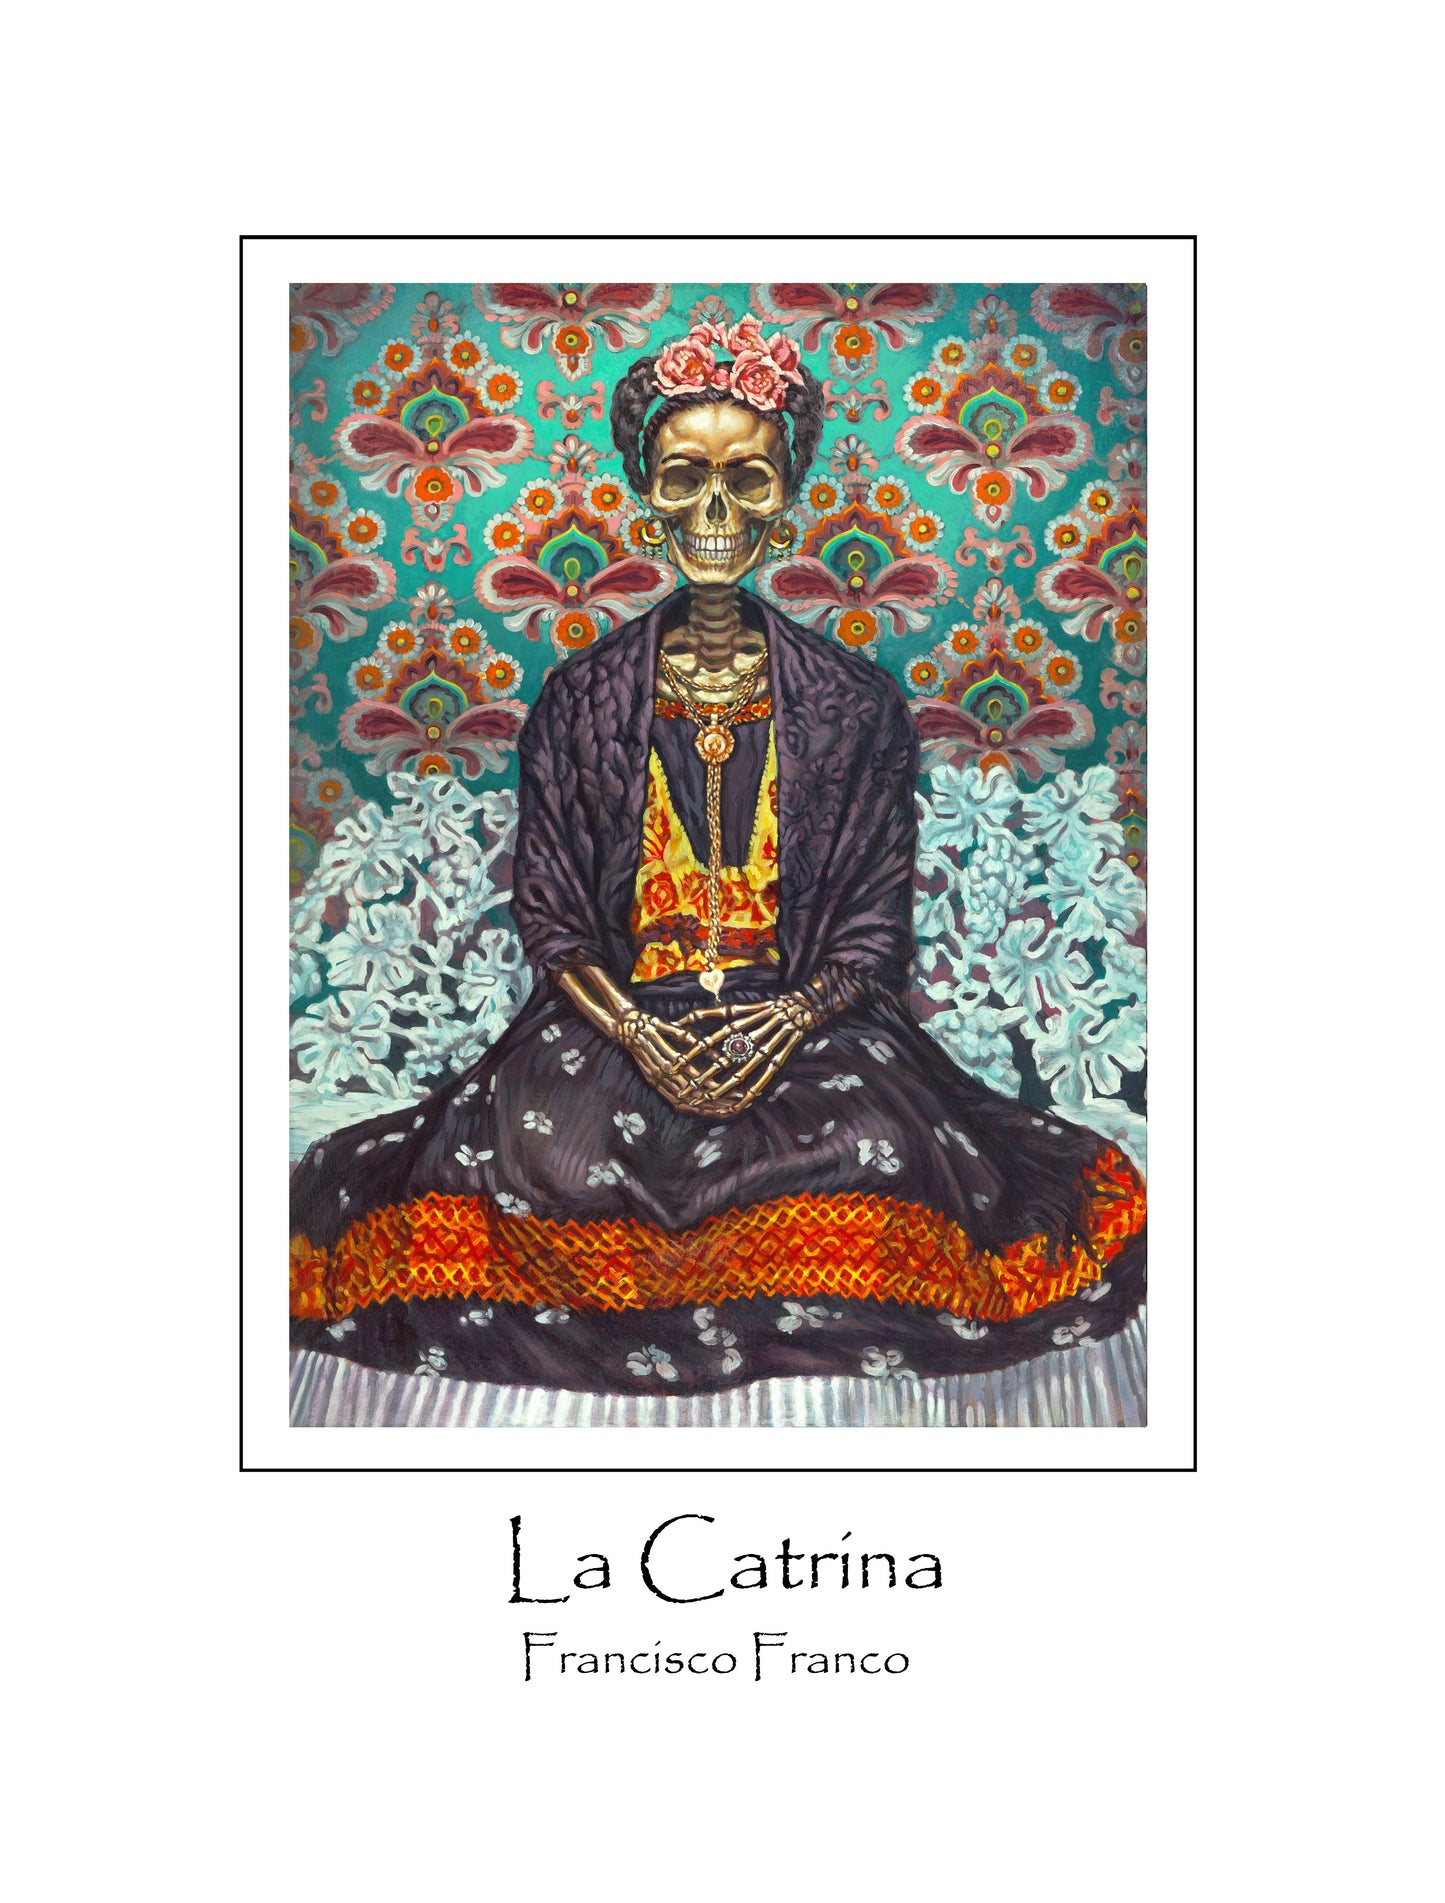 Limited Edition "La Catrina" Print